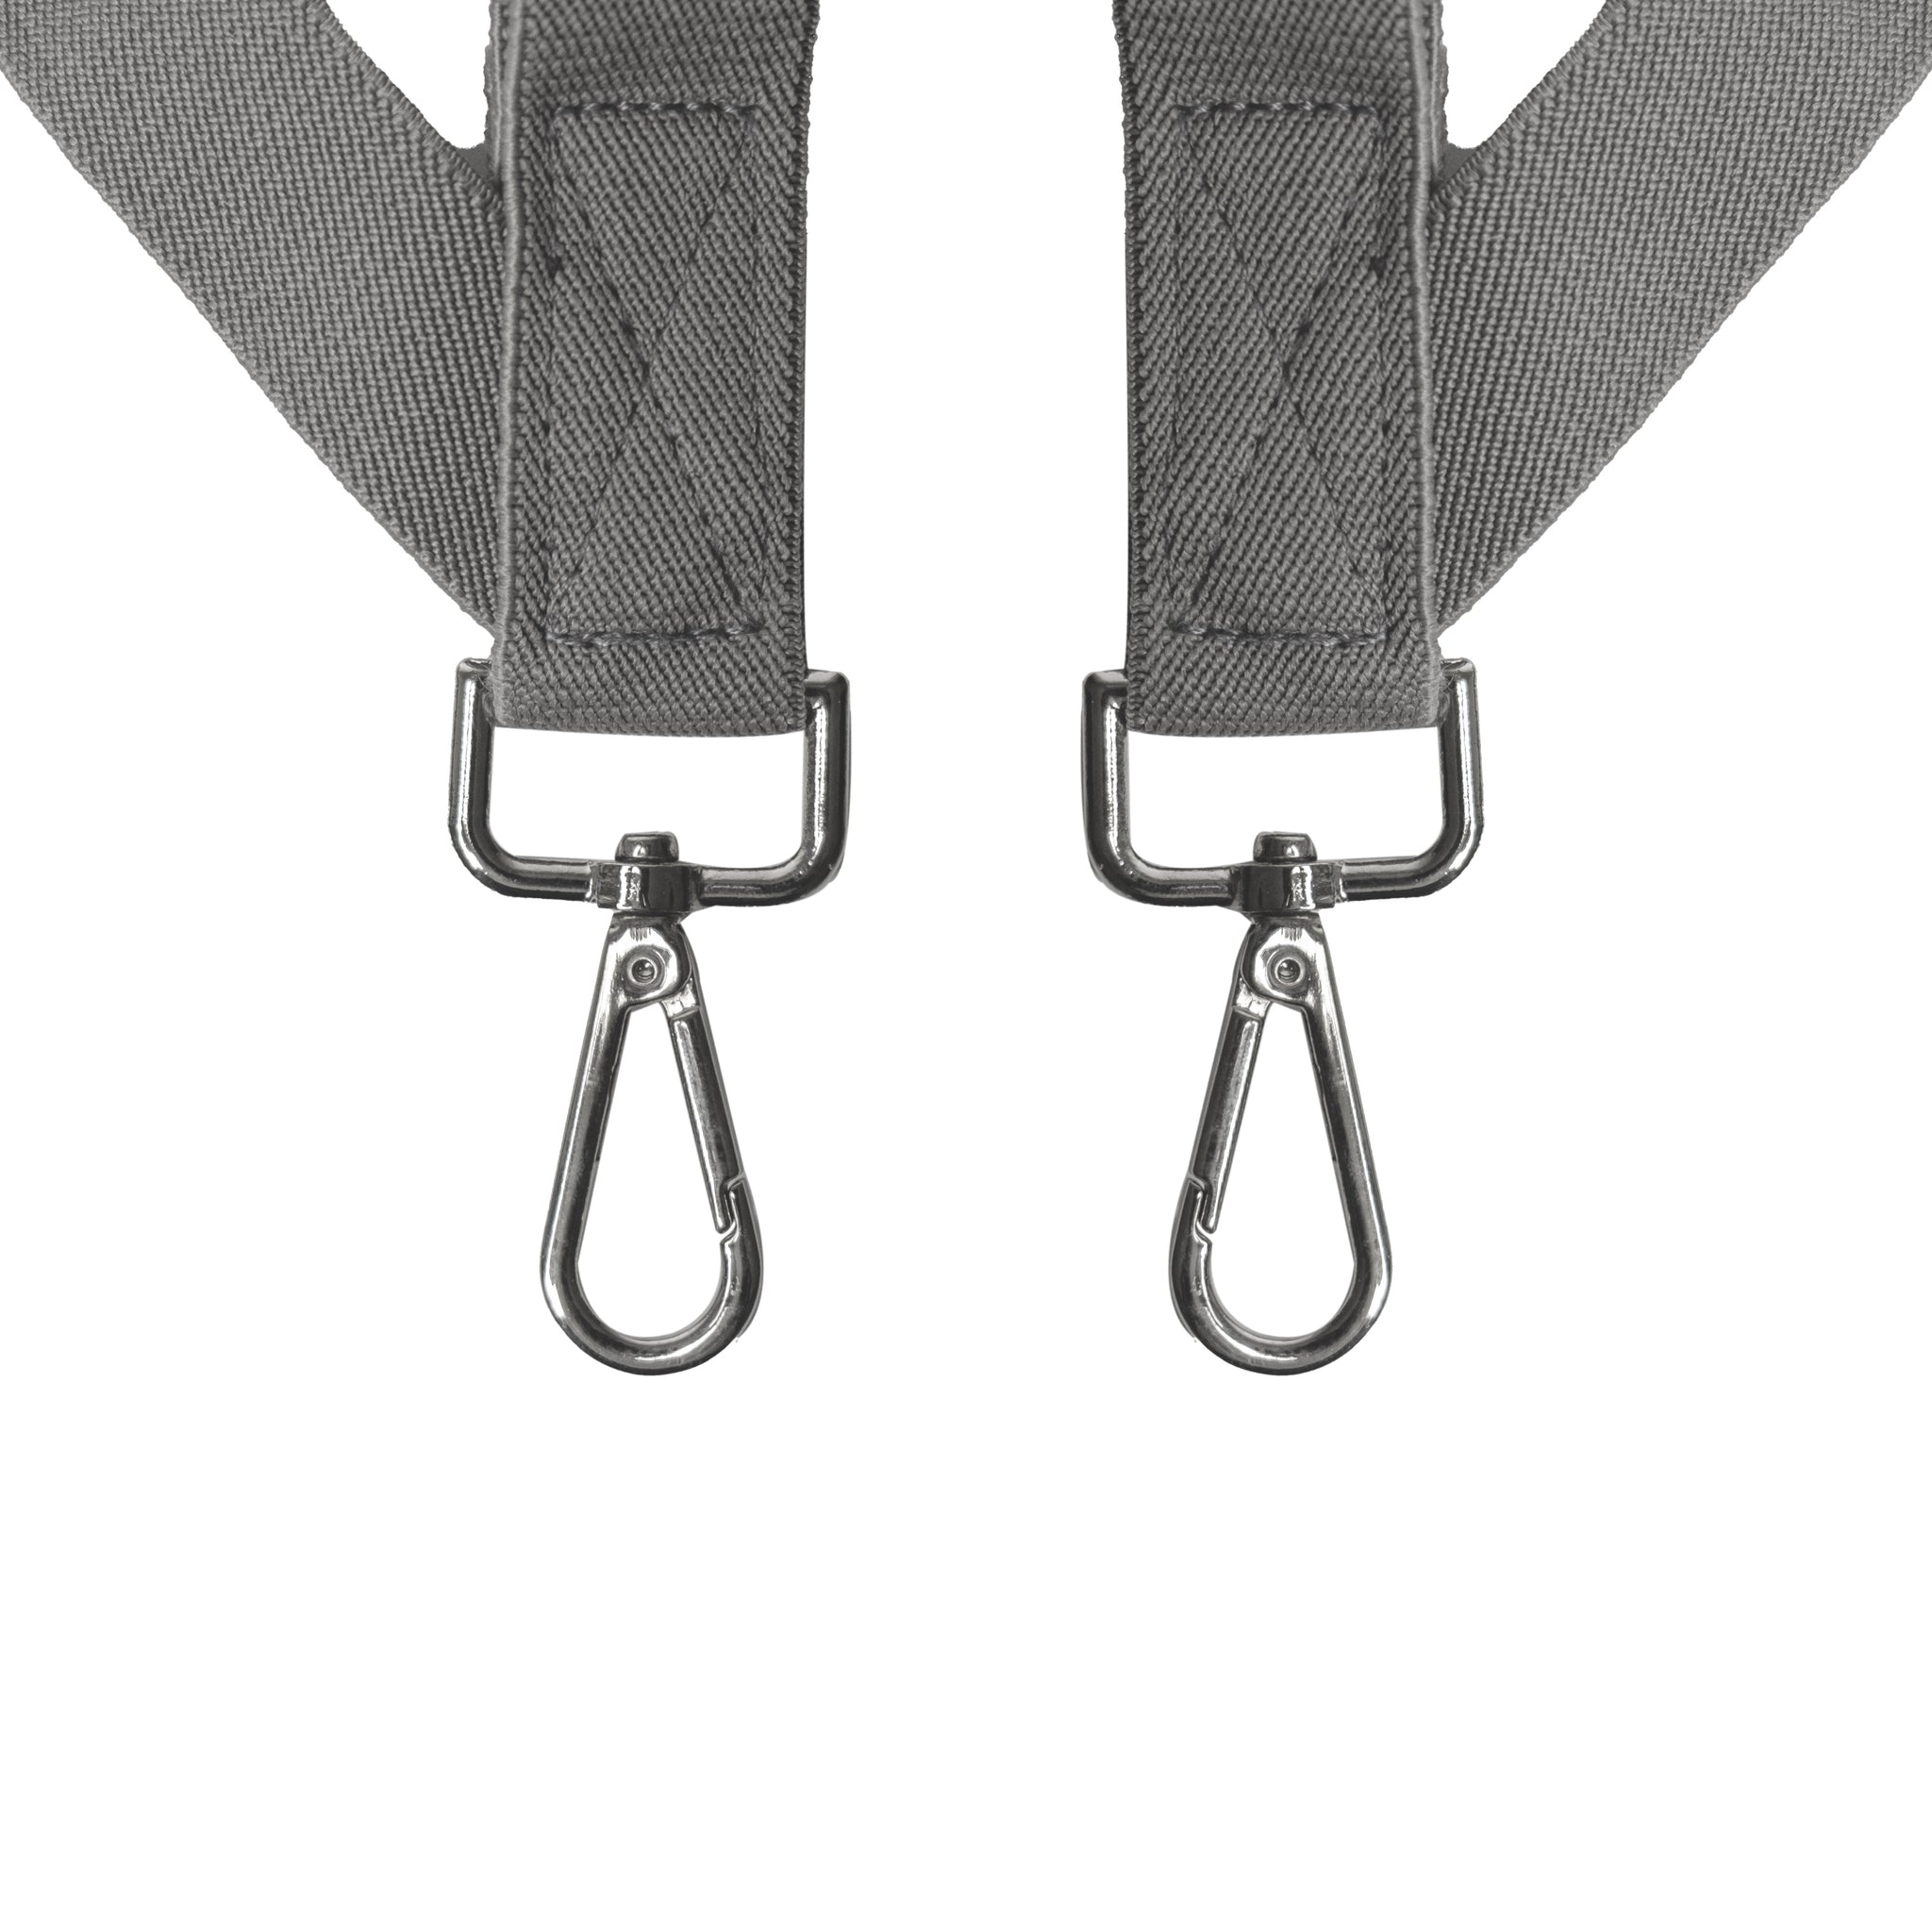 Chokore X-shaped Snap Hook Suspenders (Light Gray)